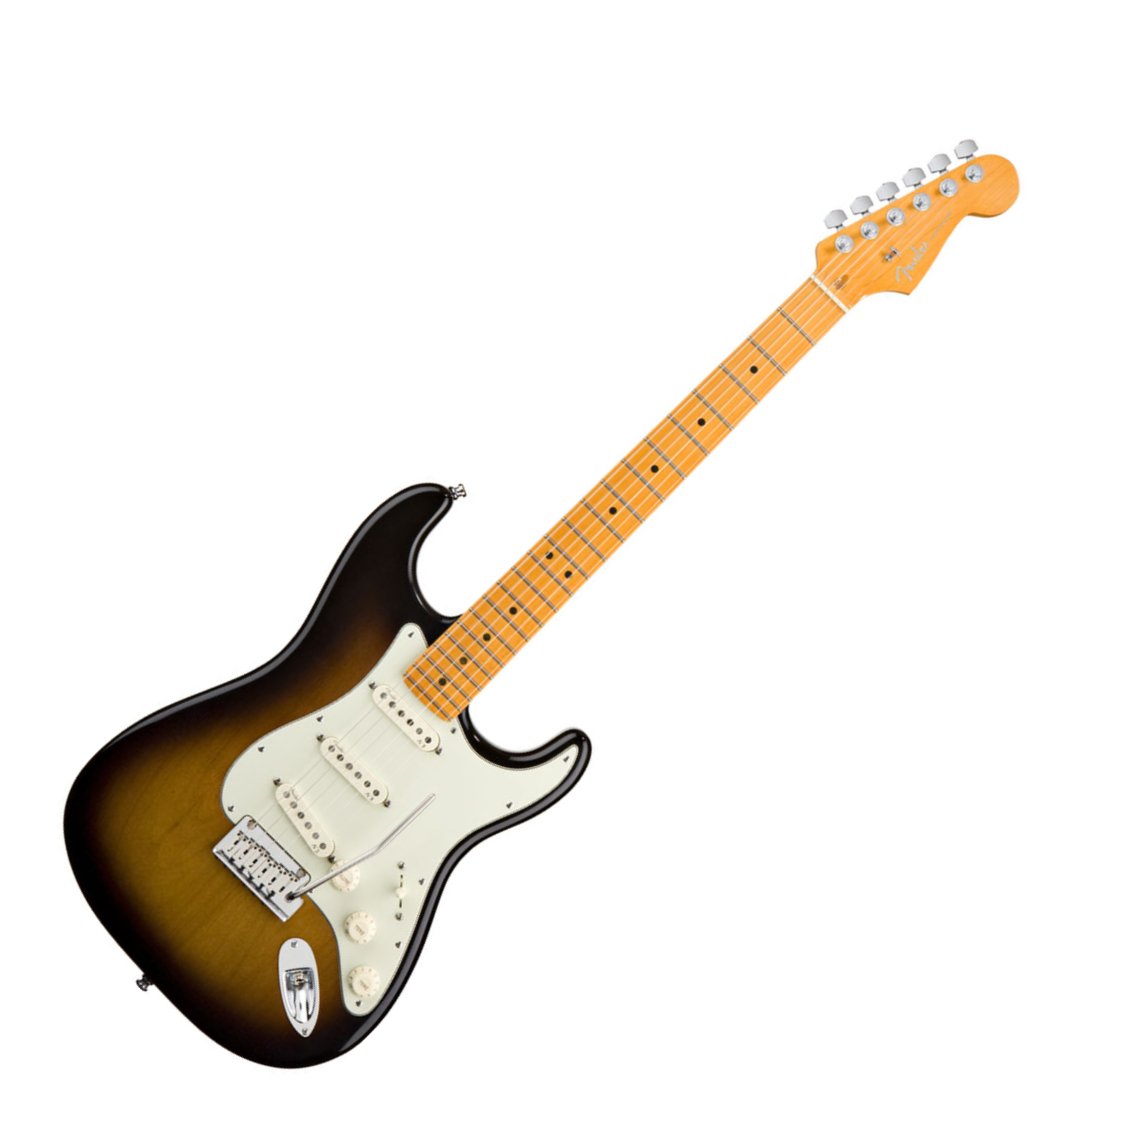 Fender Stratocaster Guitar Neck